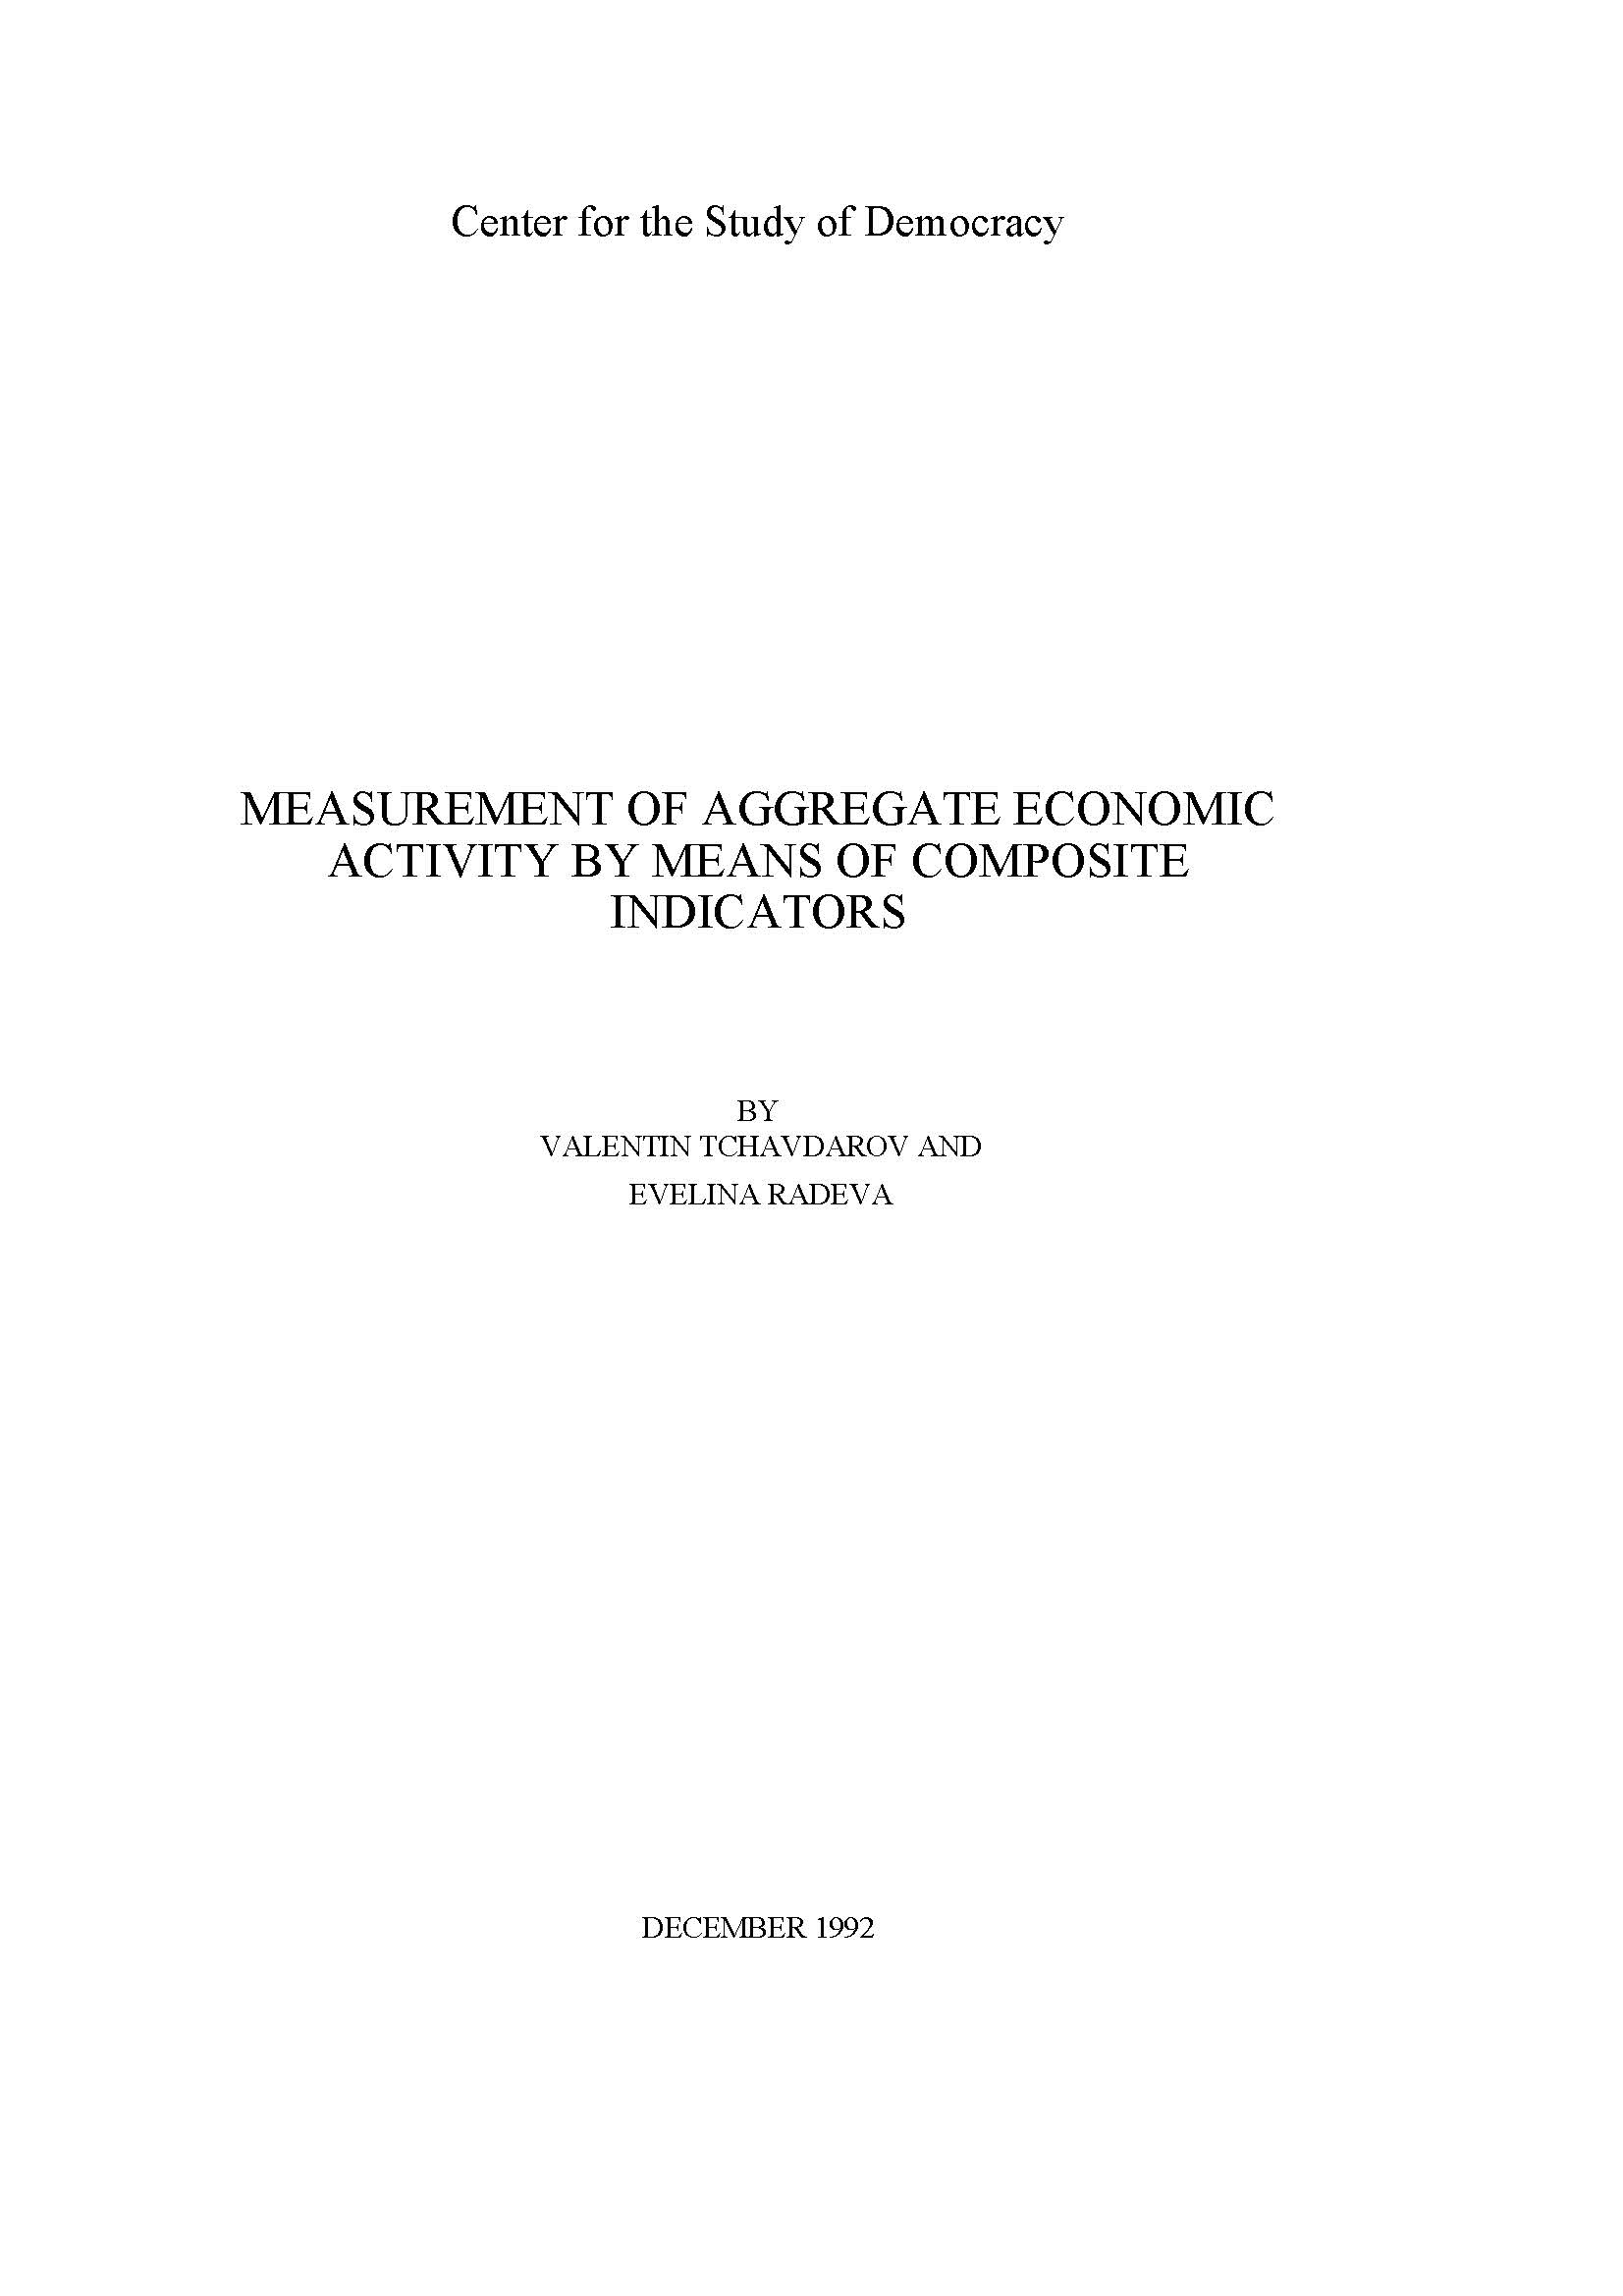 Measurement of aggregate economic activity by means of composite indicators